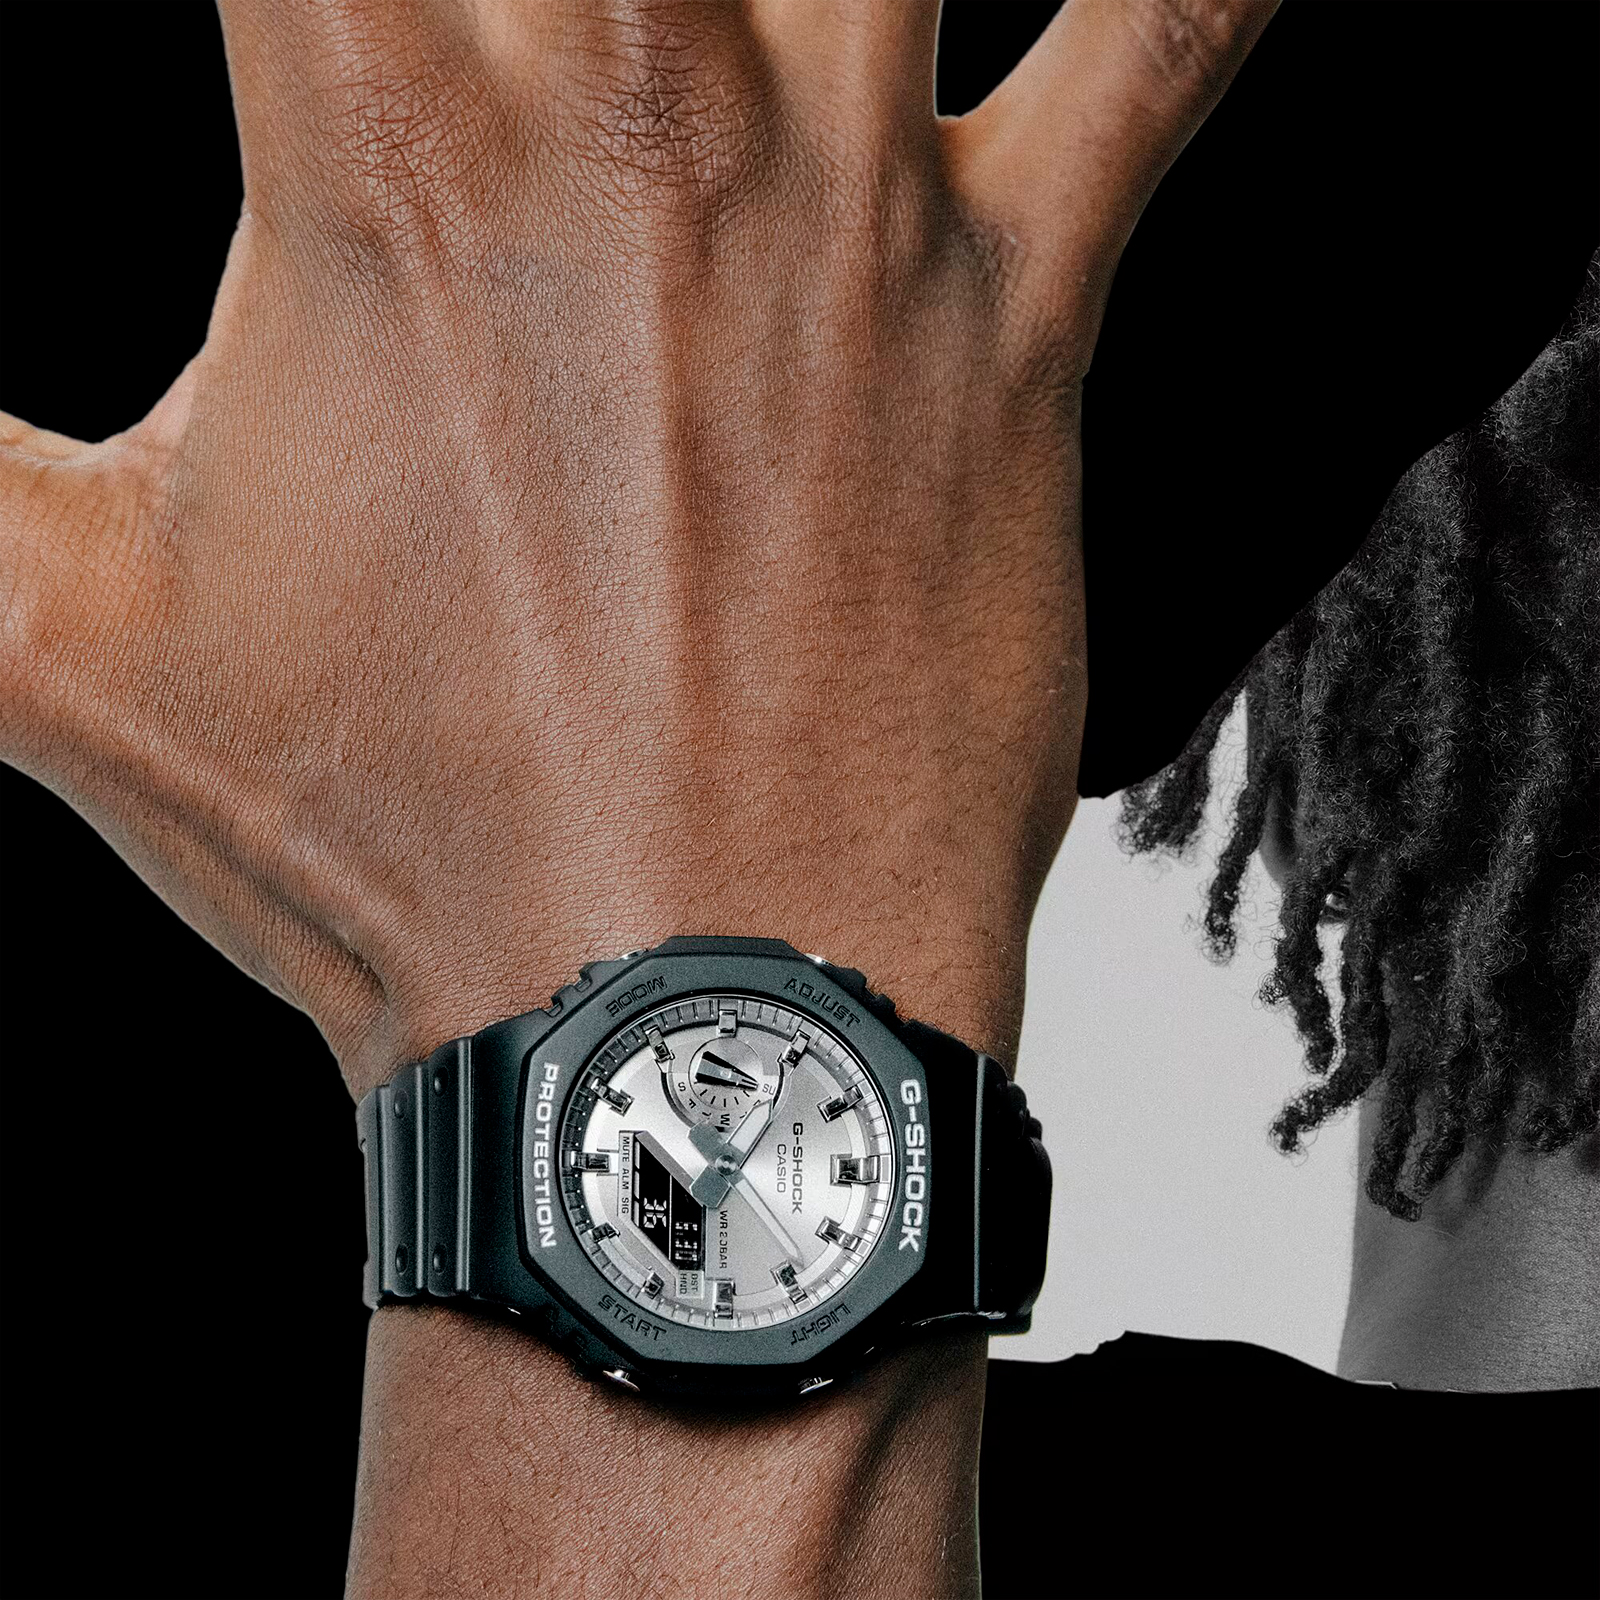 Reloj G-SHOCK GA-2100SB-1A Carbono/Resina Hombre Negro